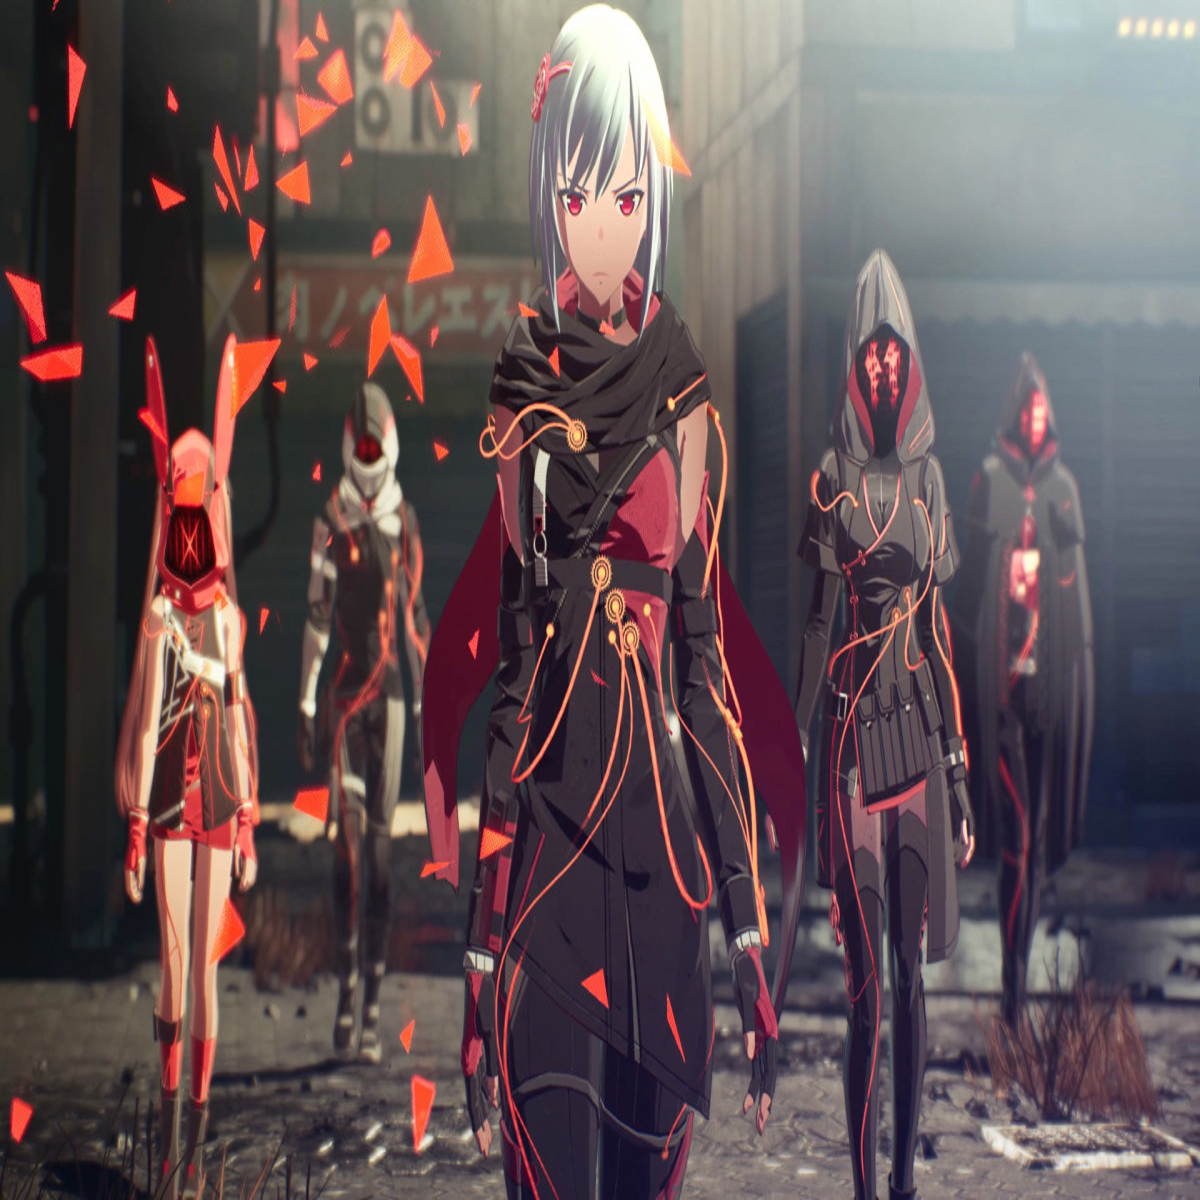 Characters appearing in Scarlet Nexus Anime